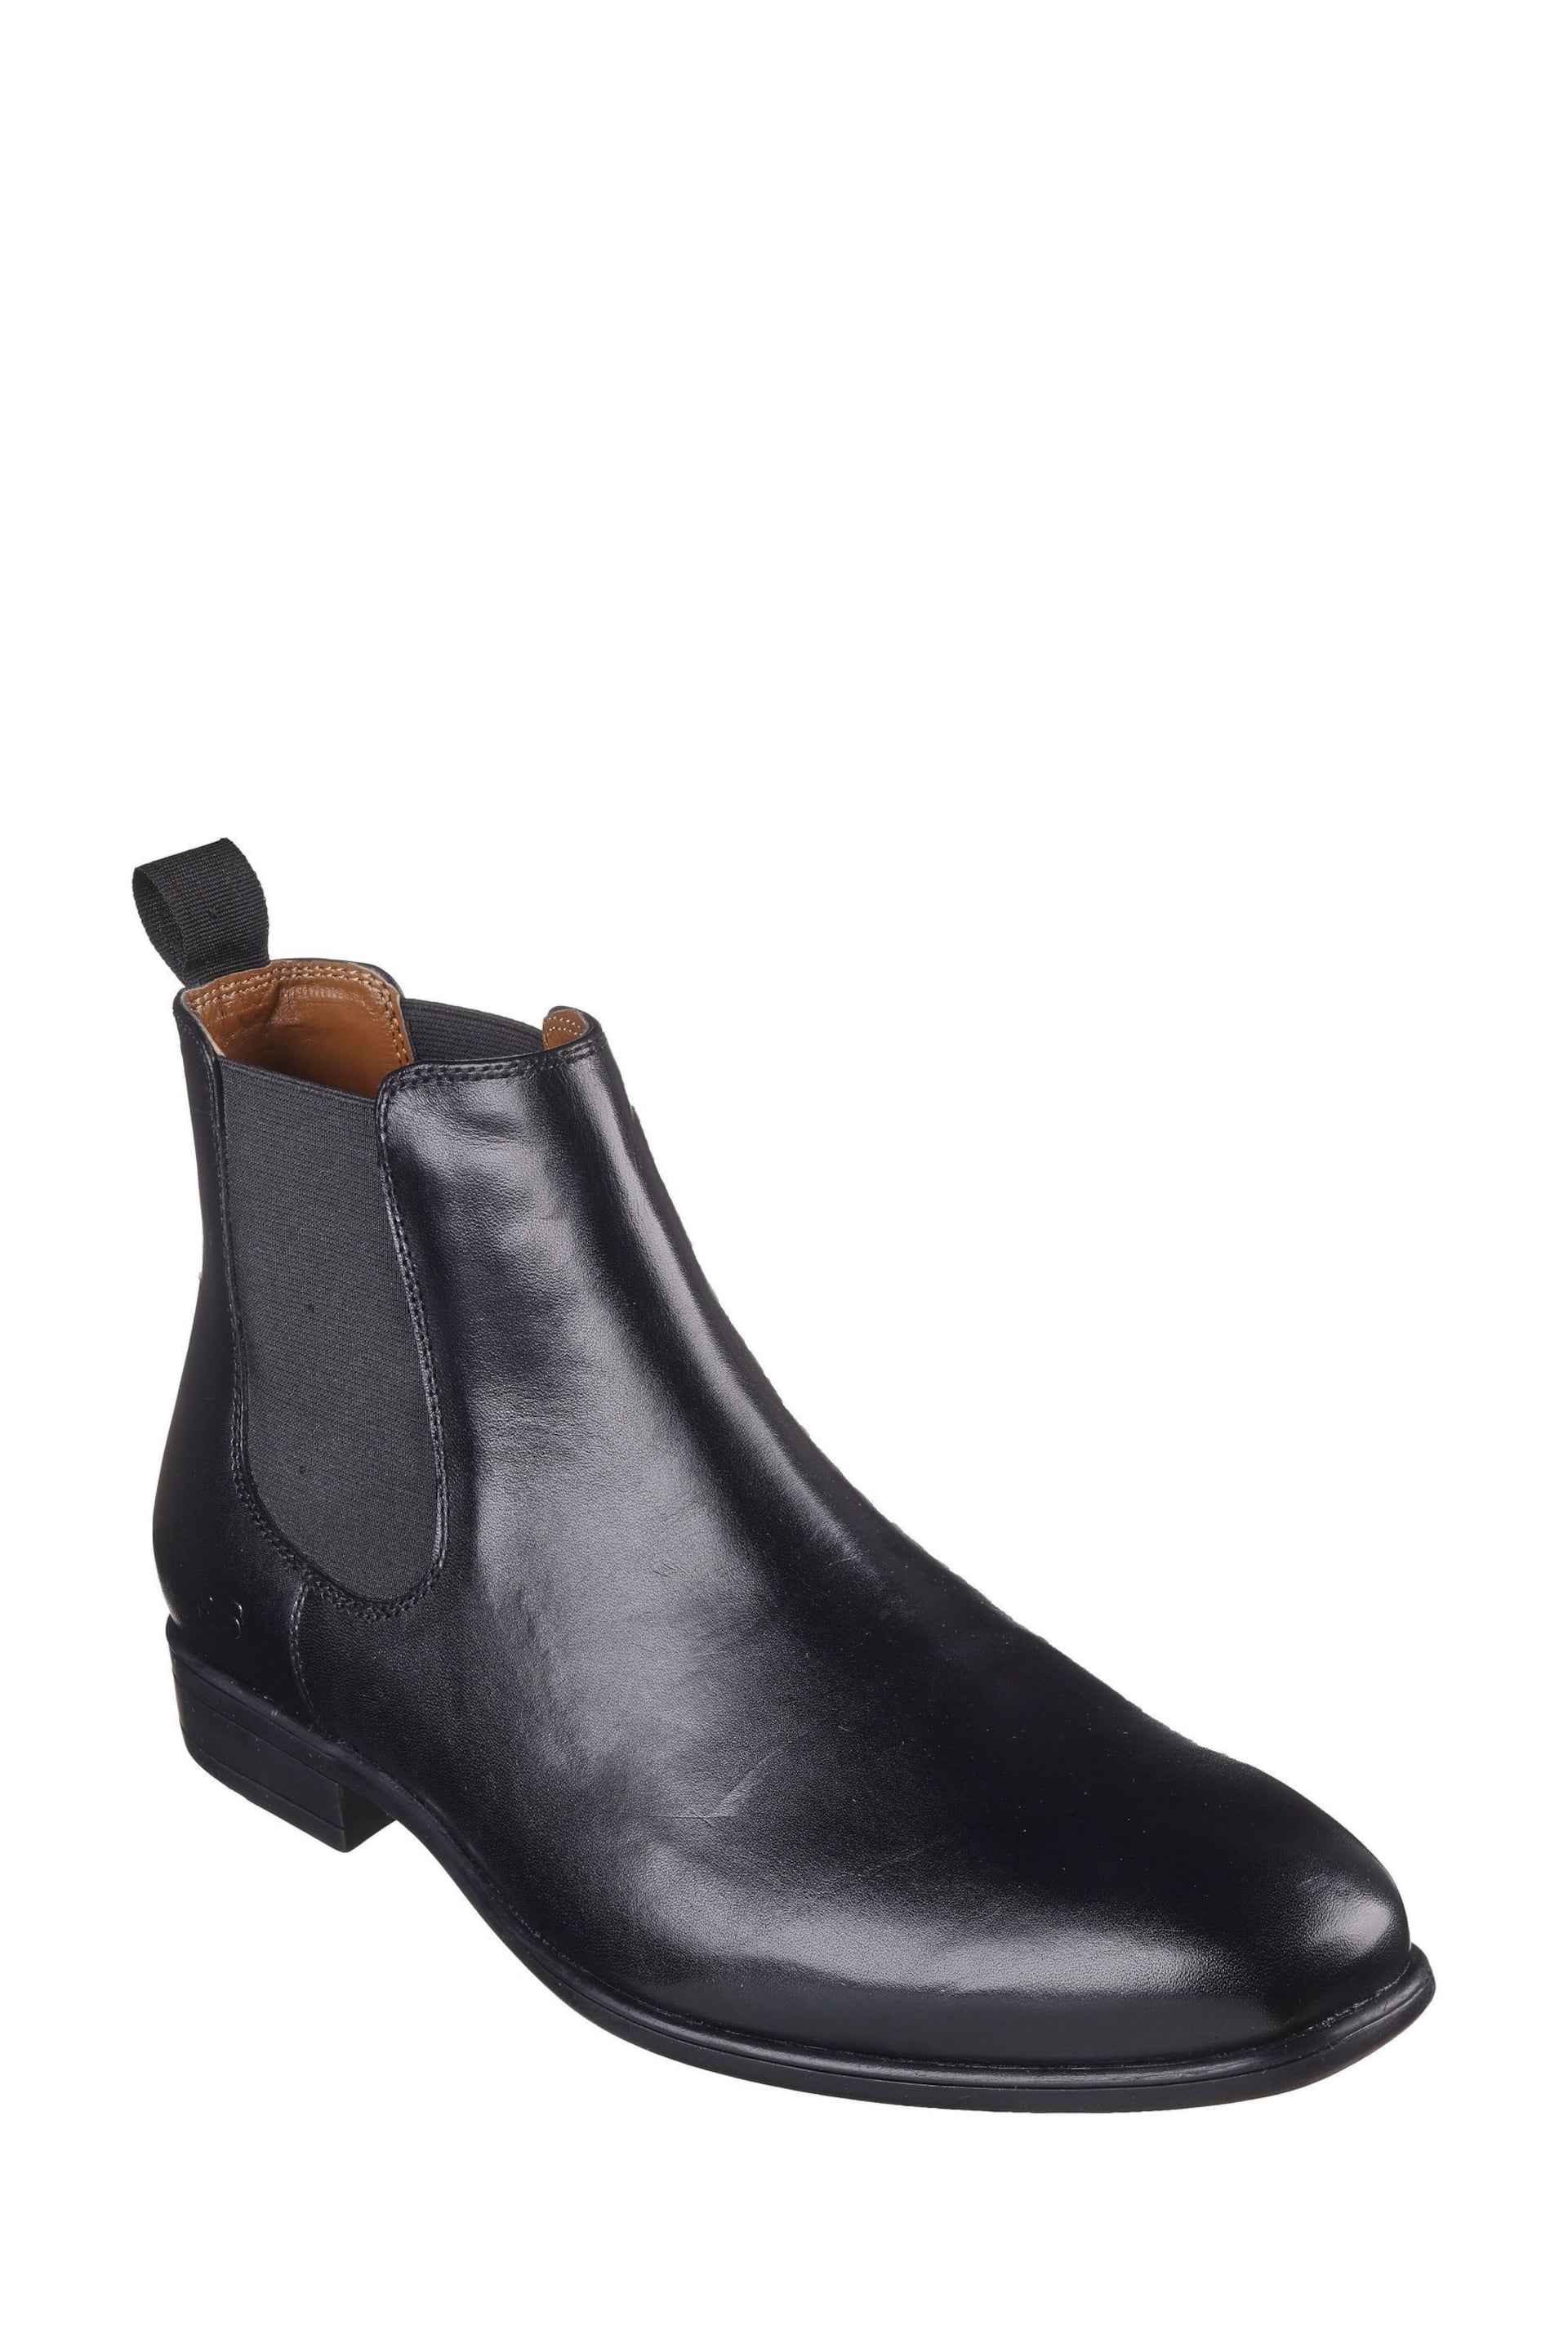 Skechers Black Trentmore Heights Boots - Image 3 of 5